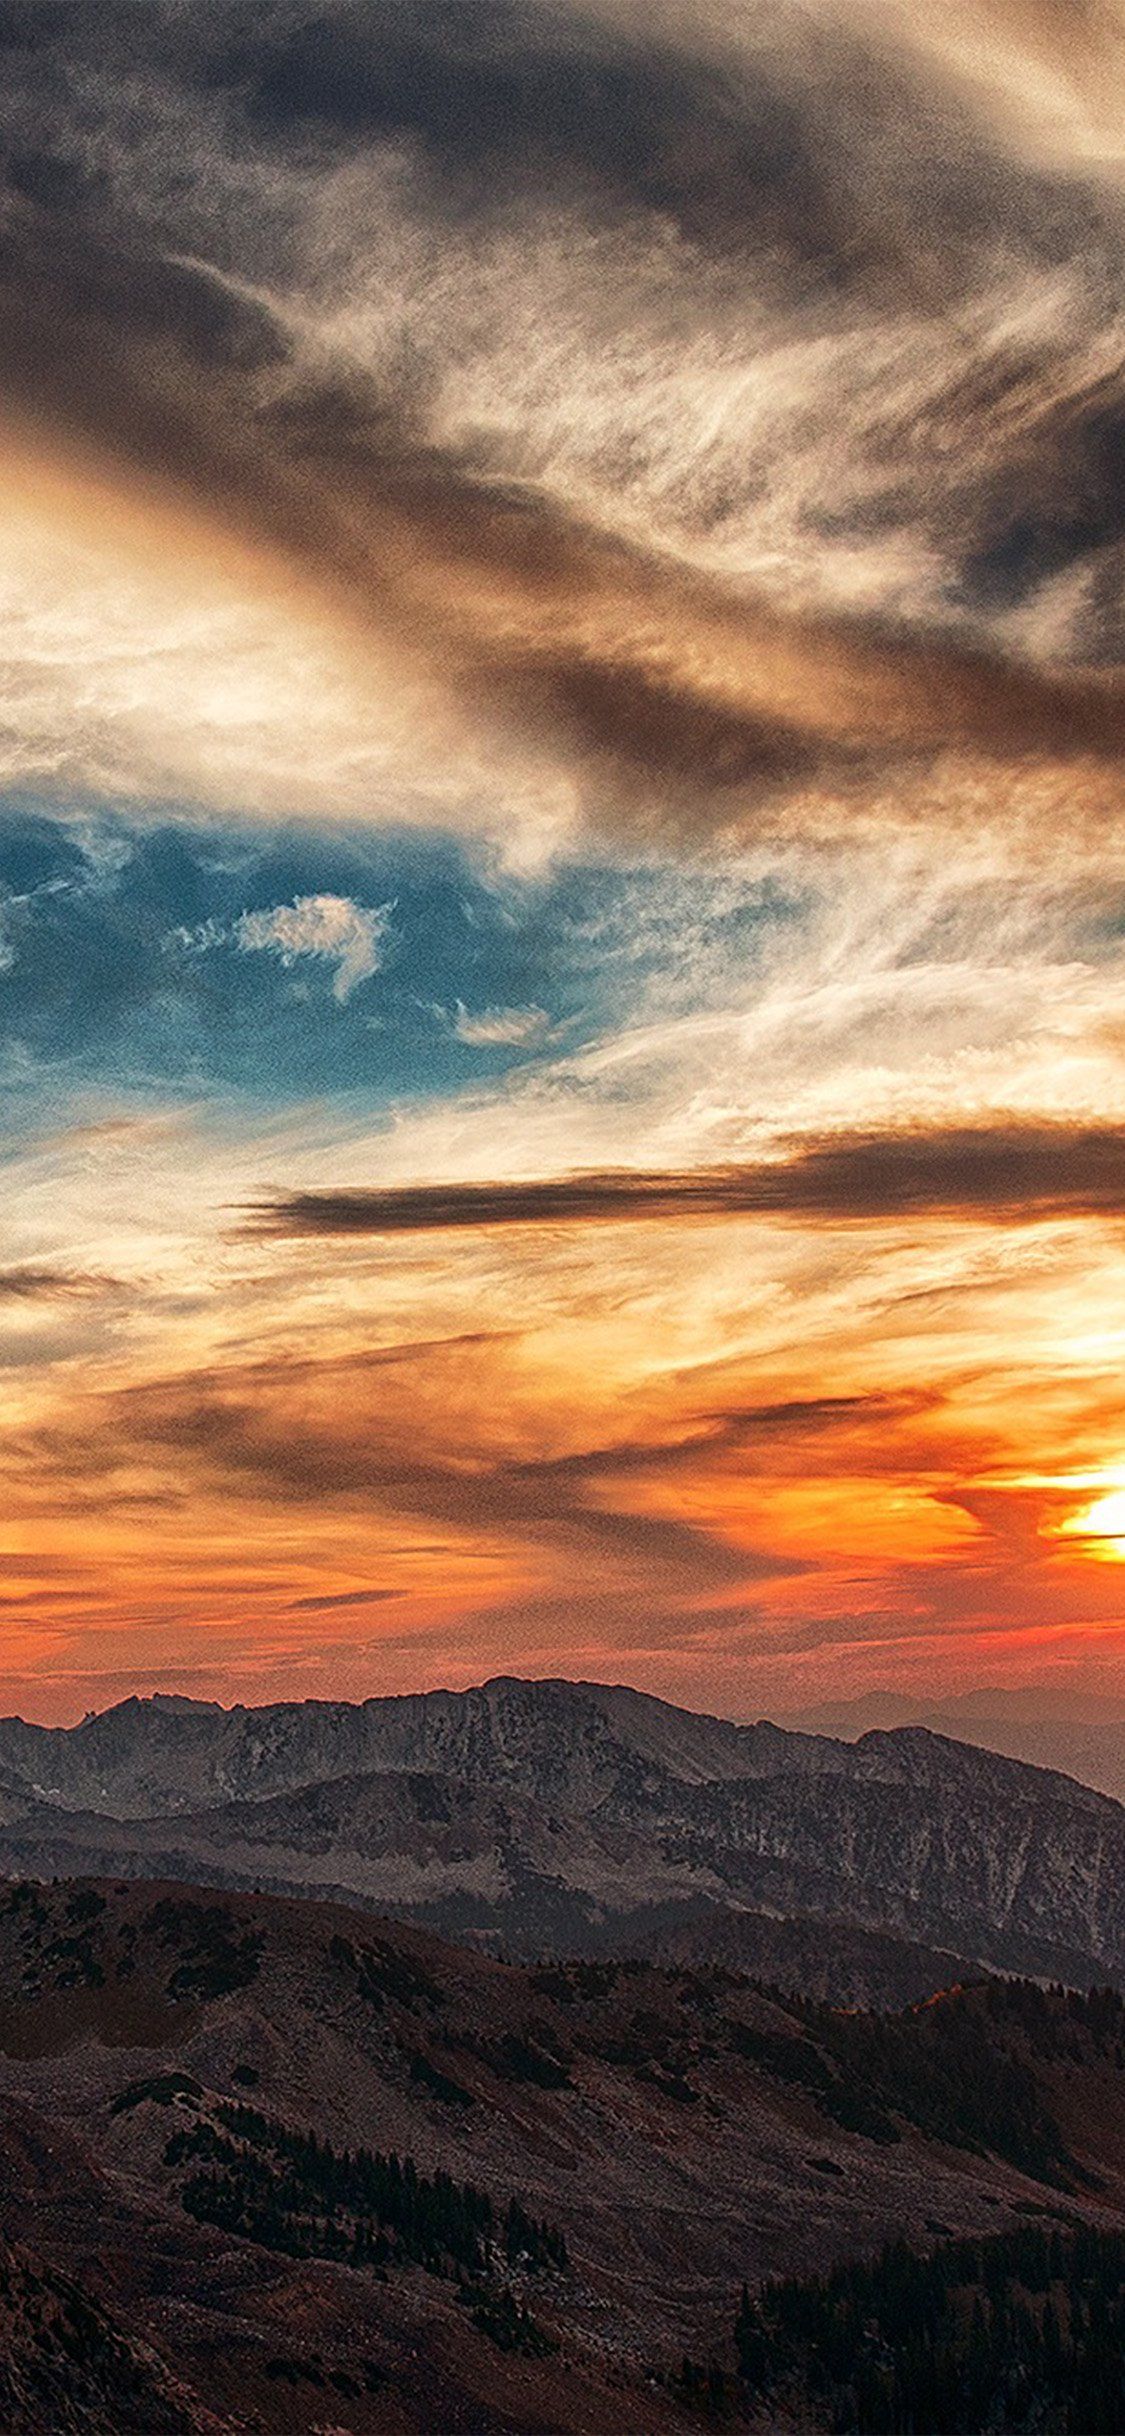 Sunset mountain sky cloud iPhone X Wallpaper Free Download